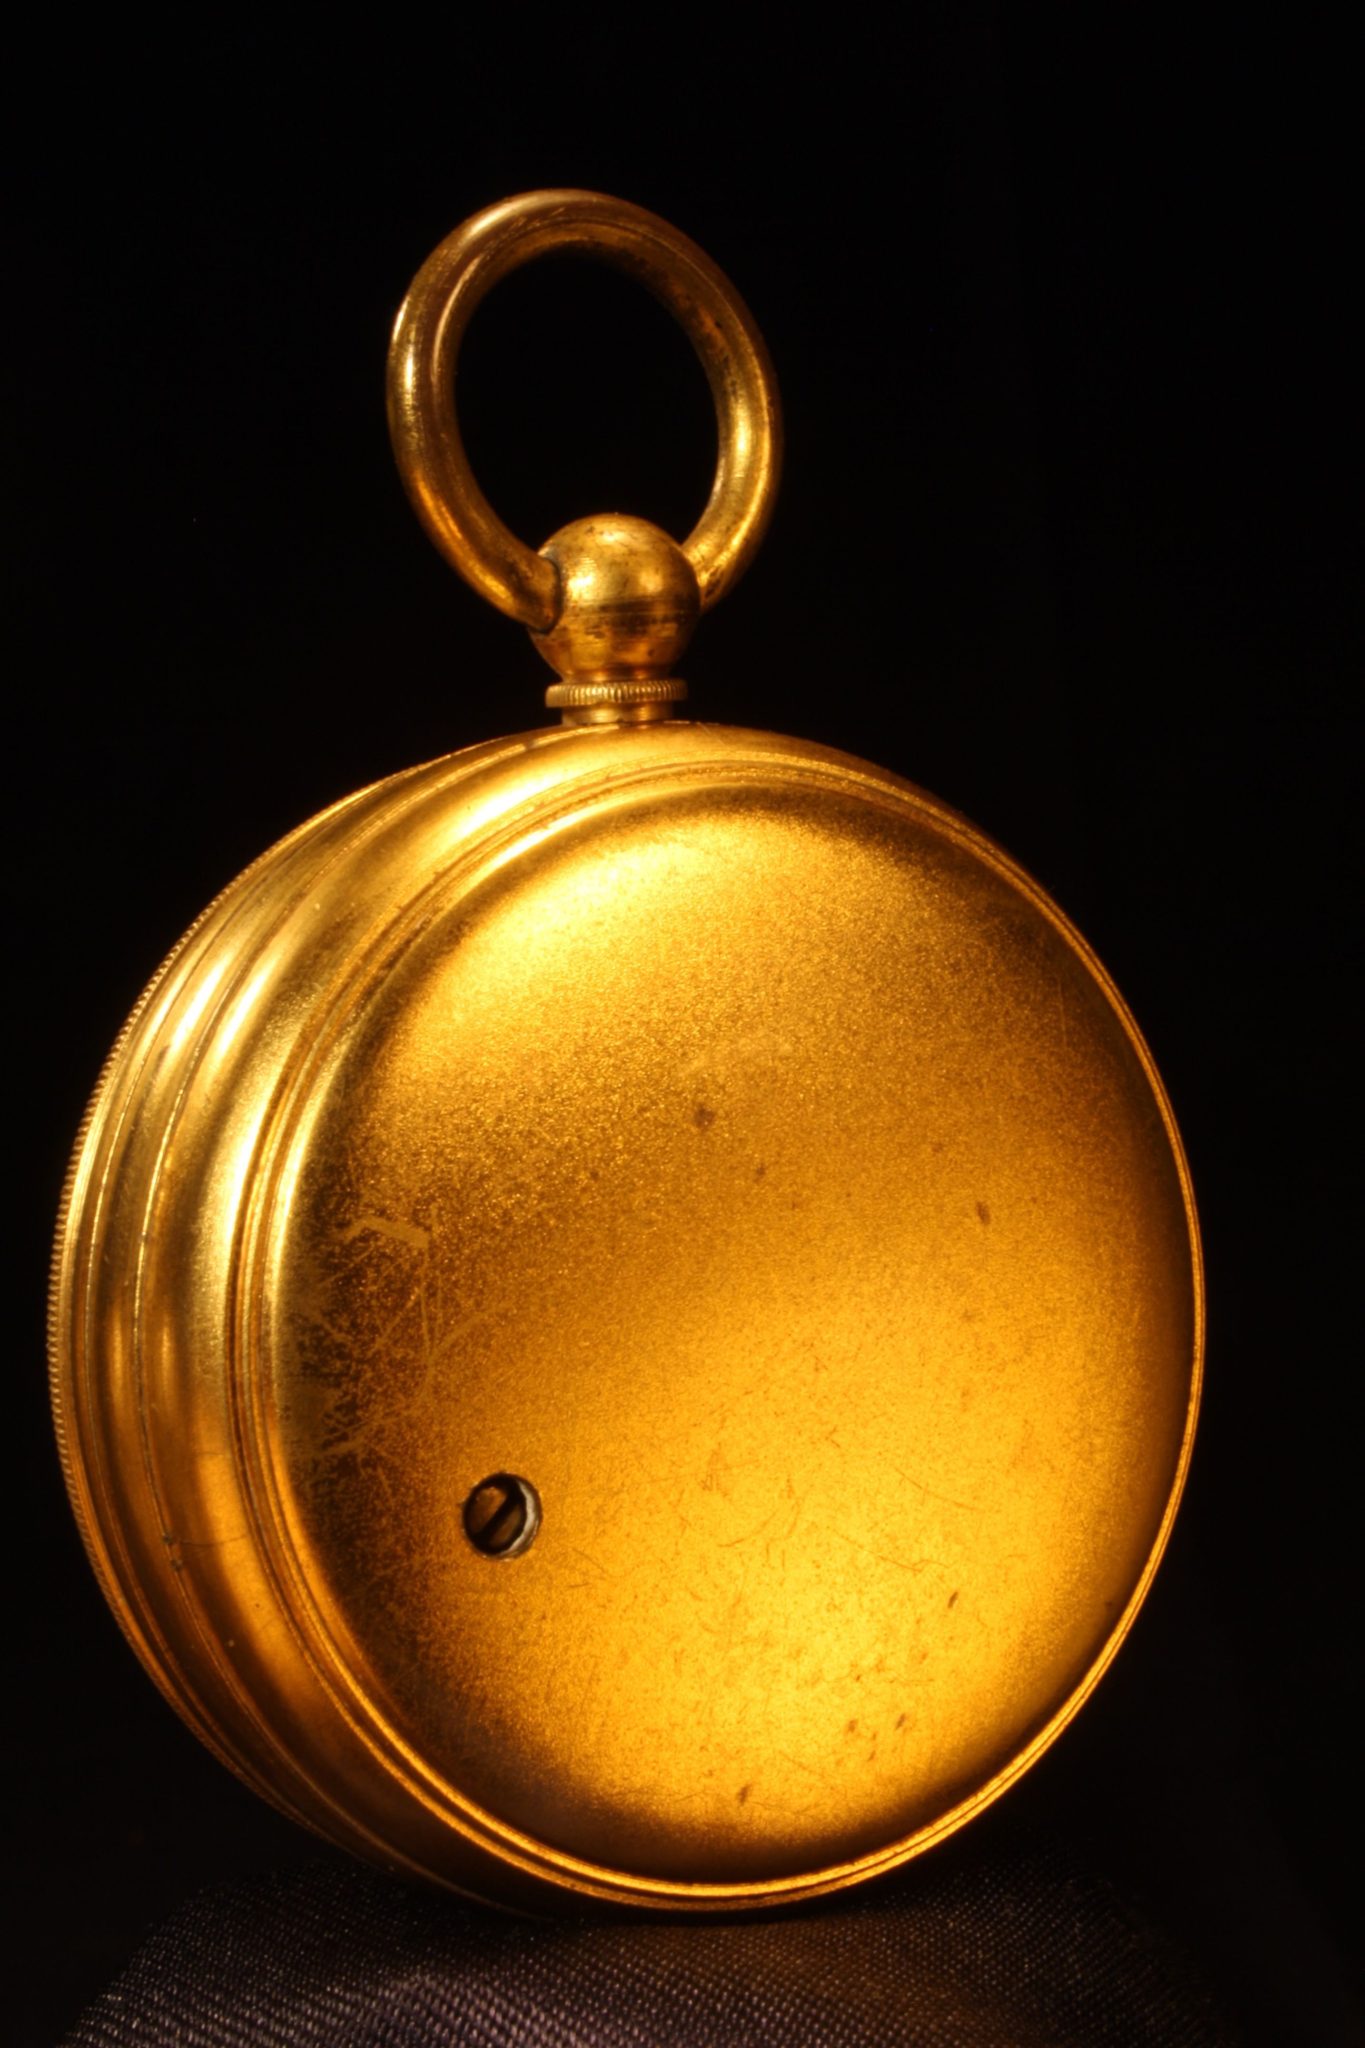 Image of Negretti & Zambra Pocket Barometer No 25820 c1915